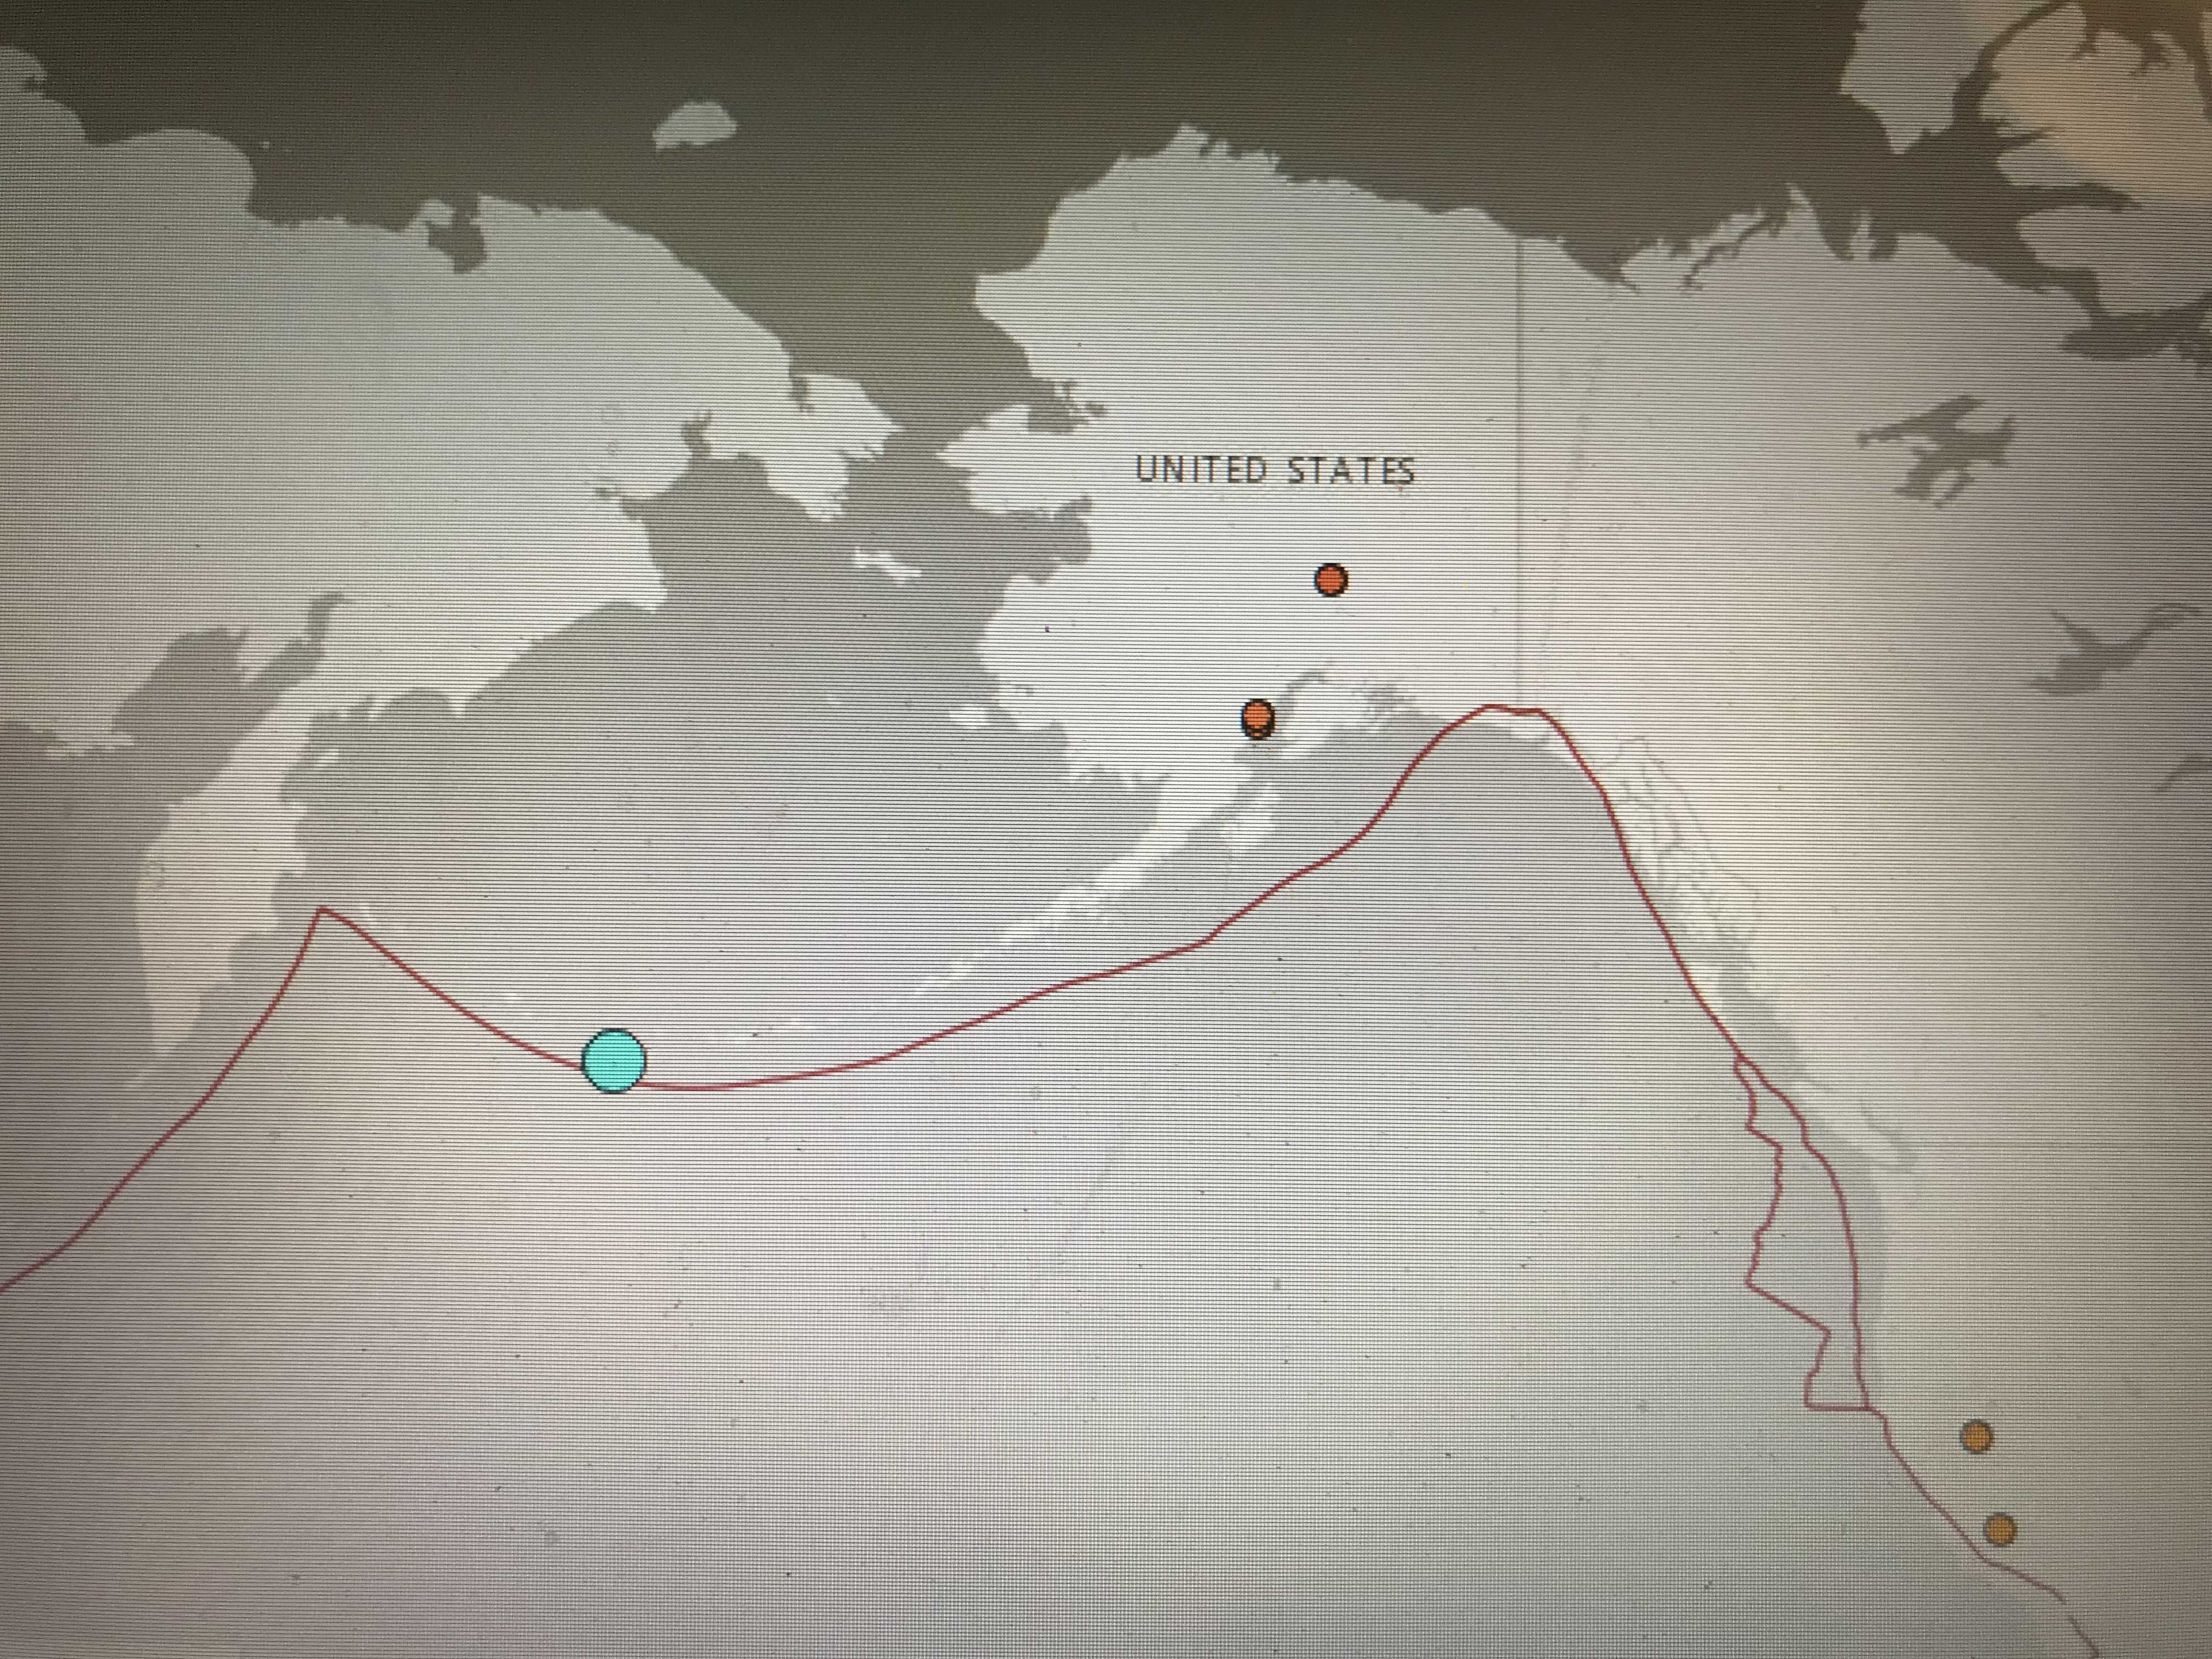 USGS: Earthquake with preliminary rating of 5.0 measured off Alaskan coast